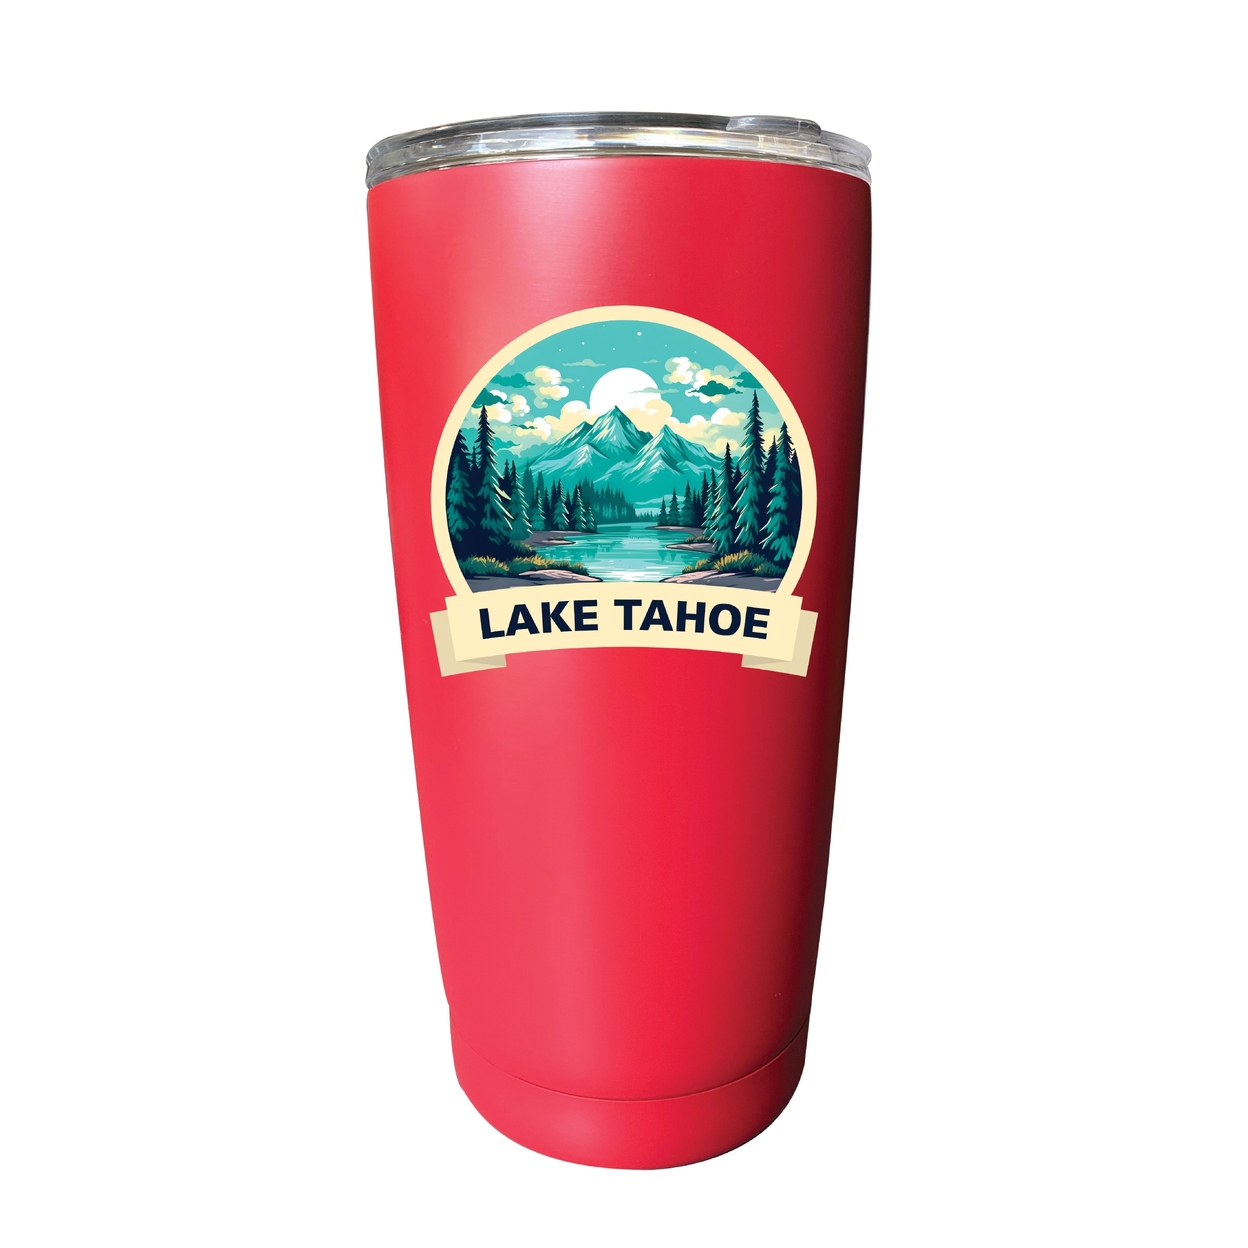 Lake Tahoe California Souvenir 16 Oz Stainless Steel Insulated Tumbler - Purple,,Single